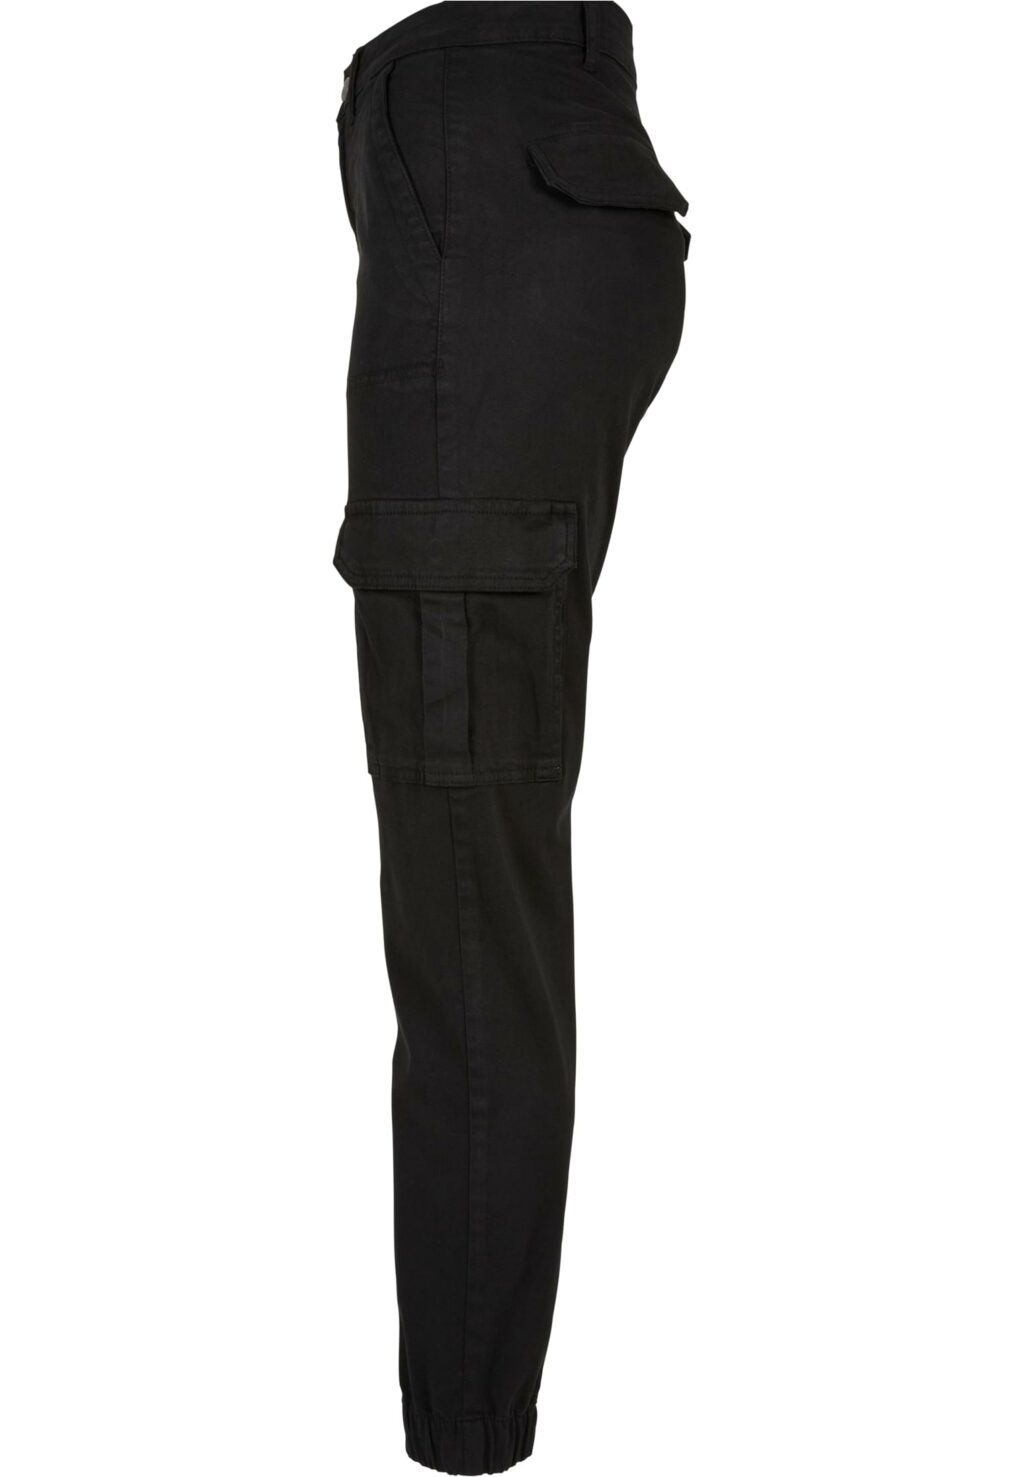 Urban Classics Ladies Cotton Twill Utility Pants black TB5454